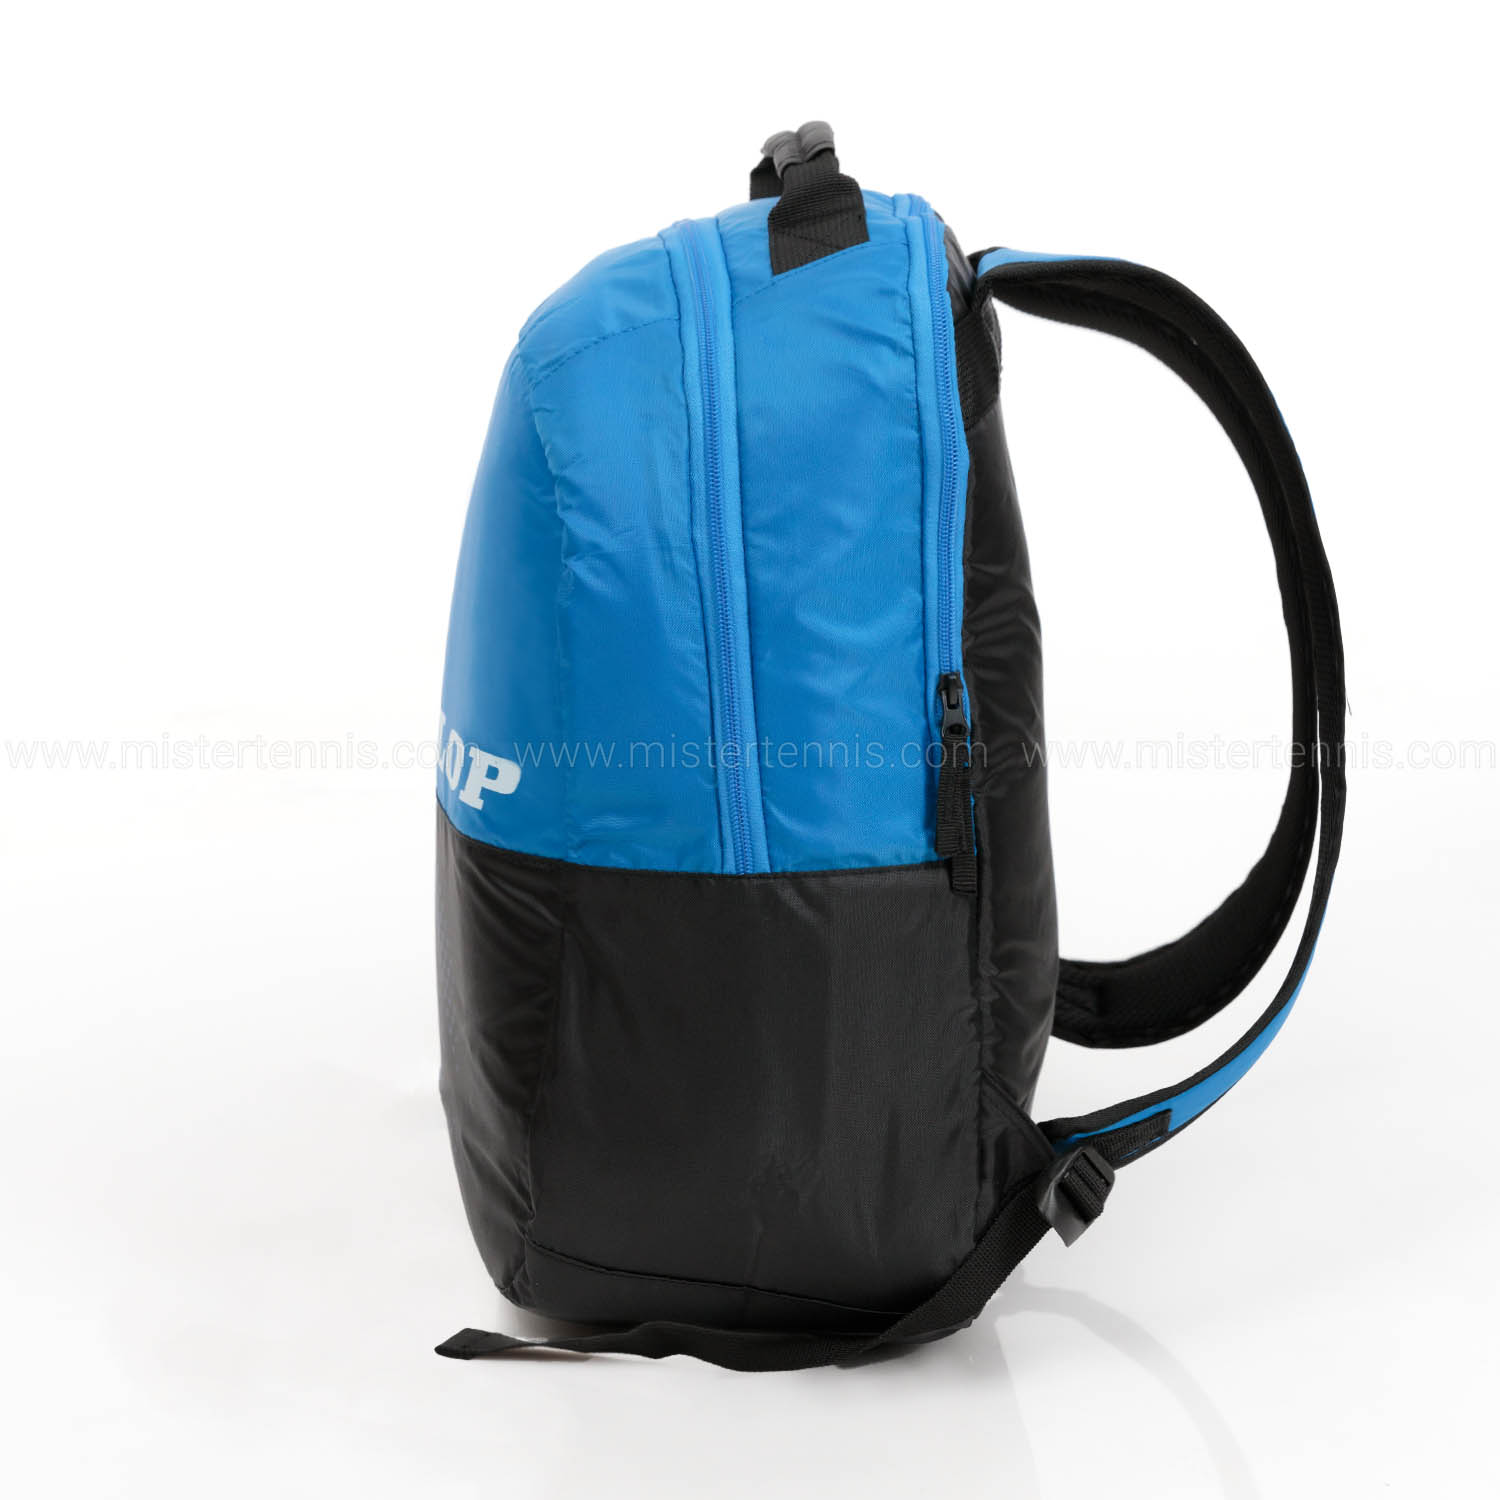 Dunlop CX Club Backpack - Black/Blue